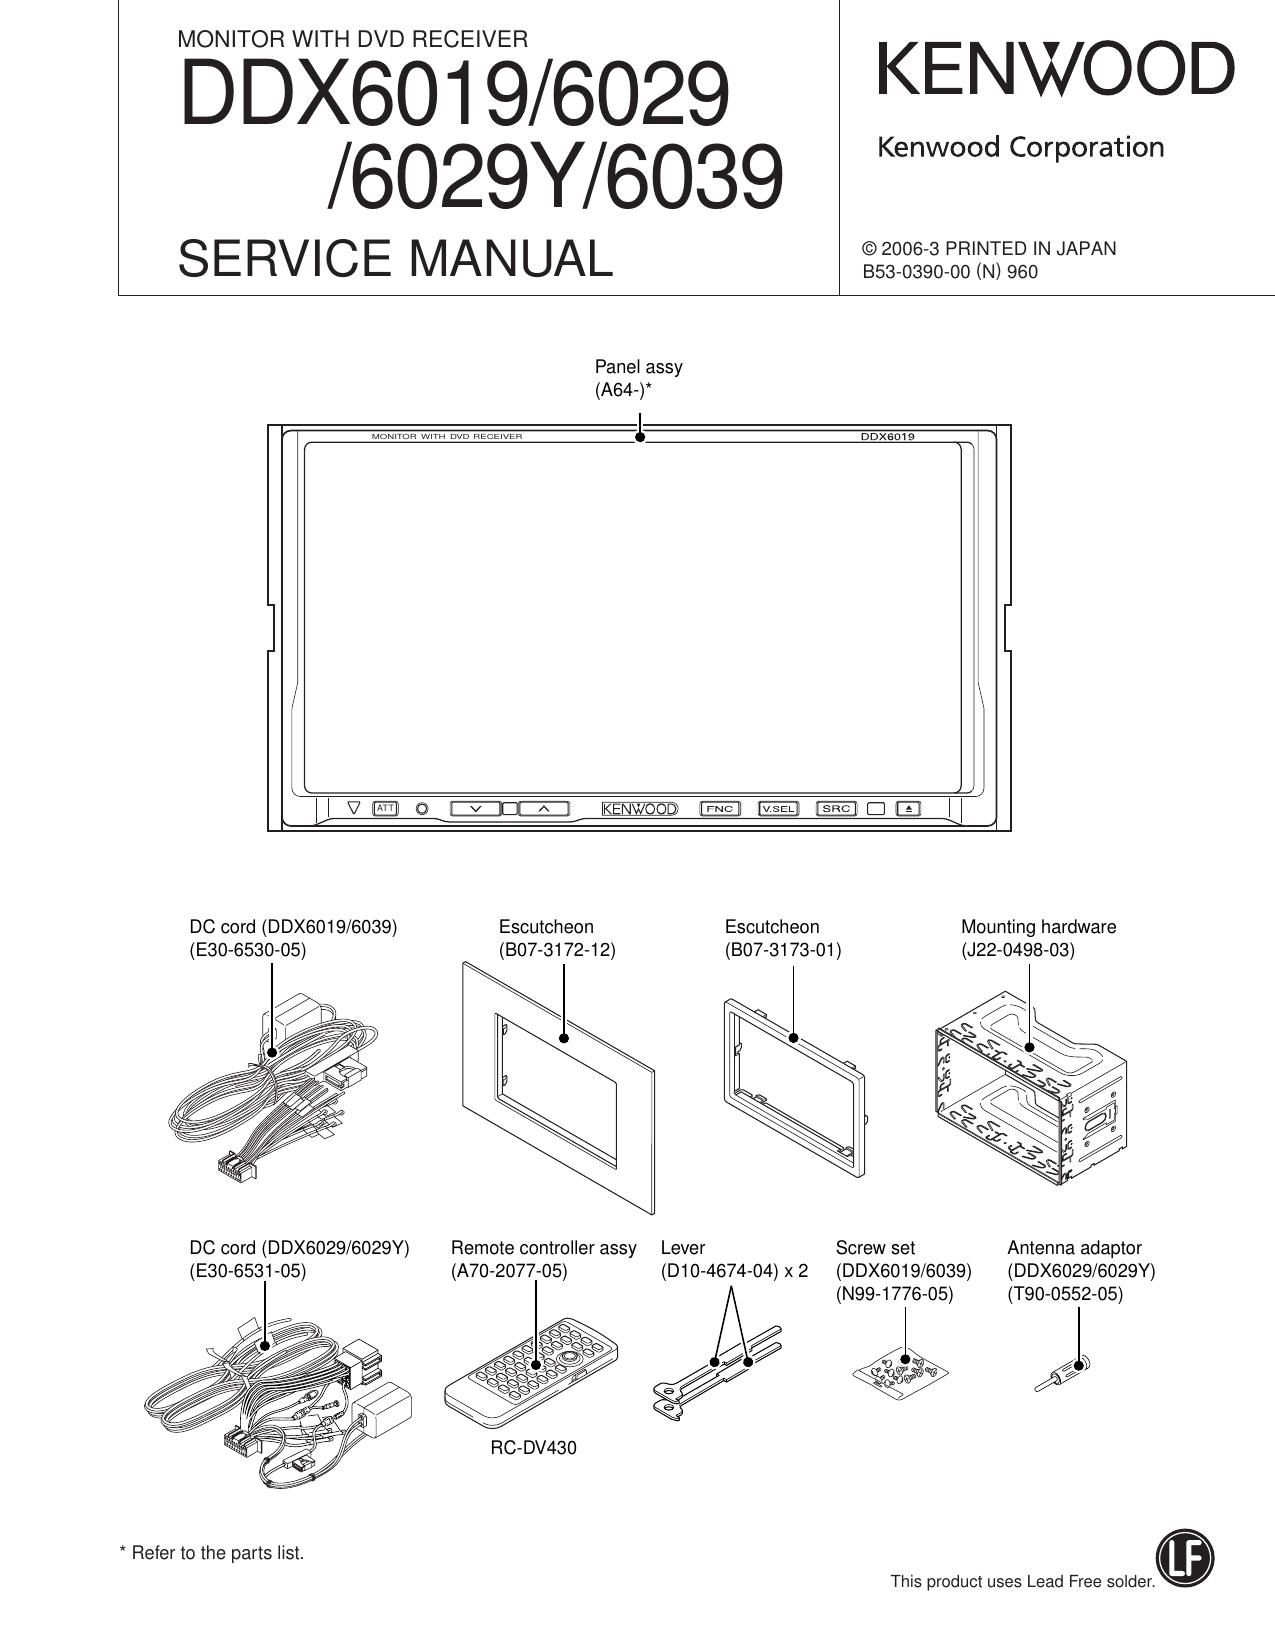 Kenwood DDX 6039 HU Service Manual